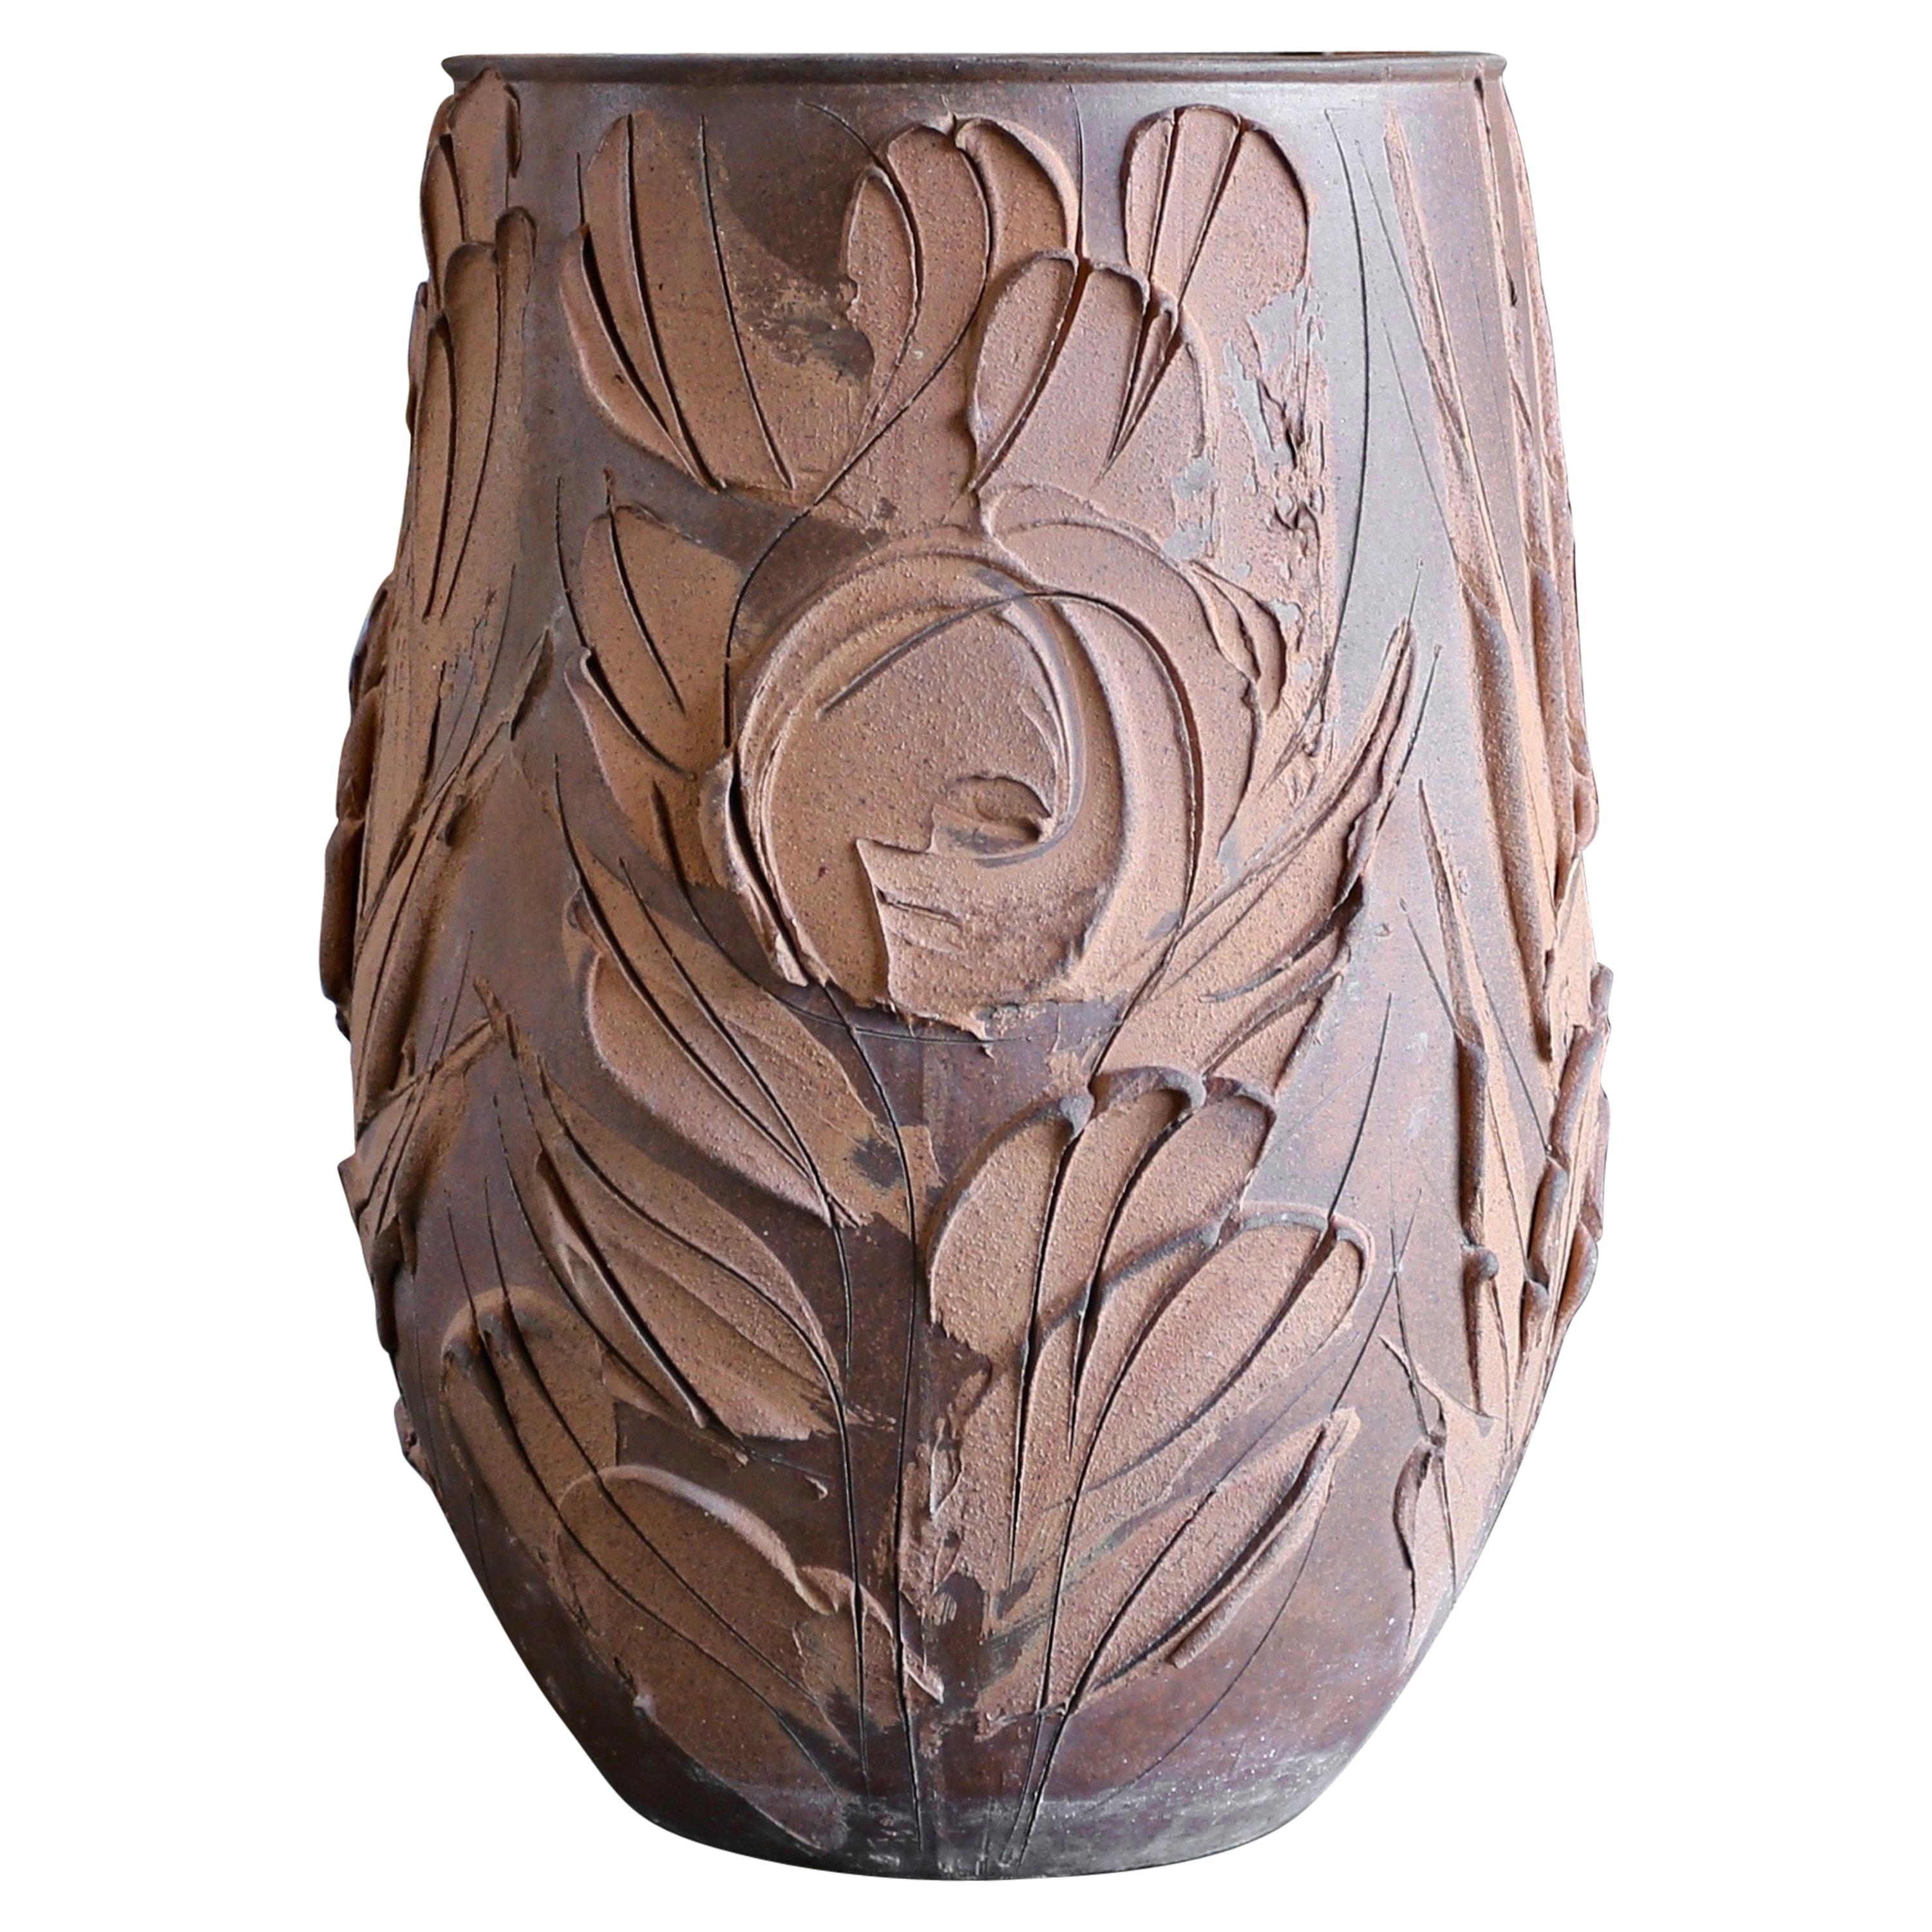 David Cressey "Expressive" Design Ceramic Planter